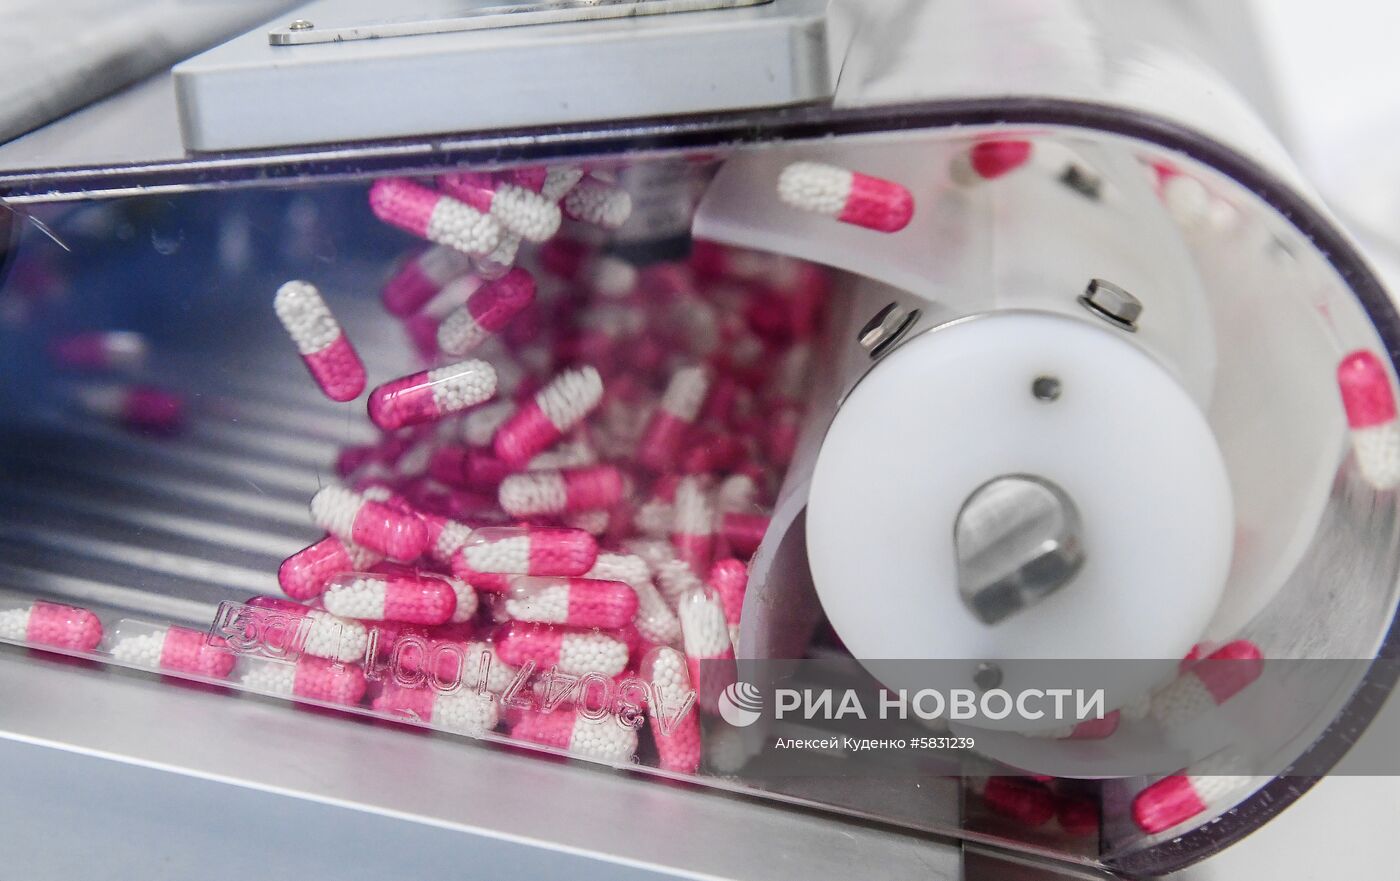 Производство лекарств на фармацевтическом предприятии «Оболенское"